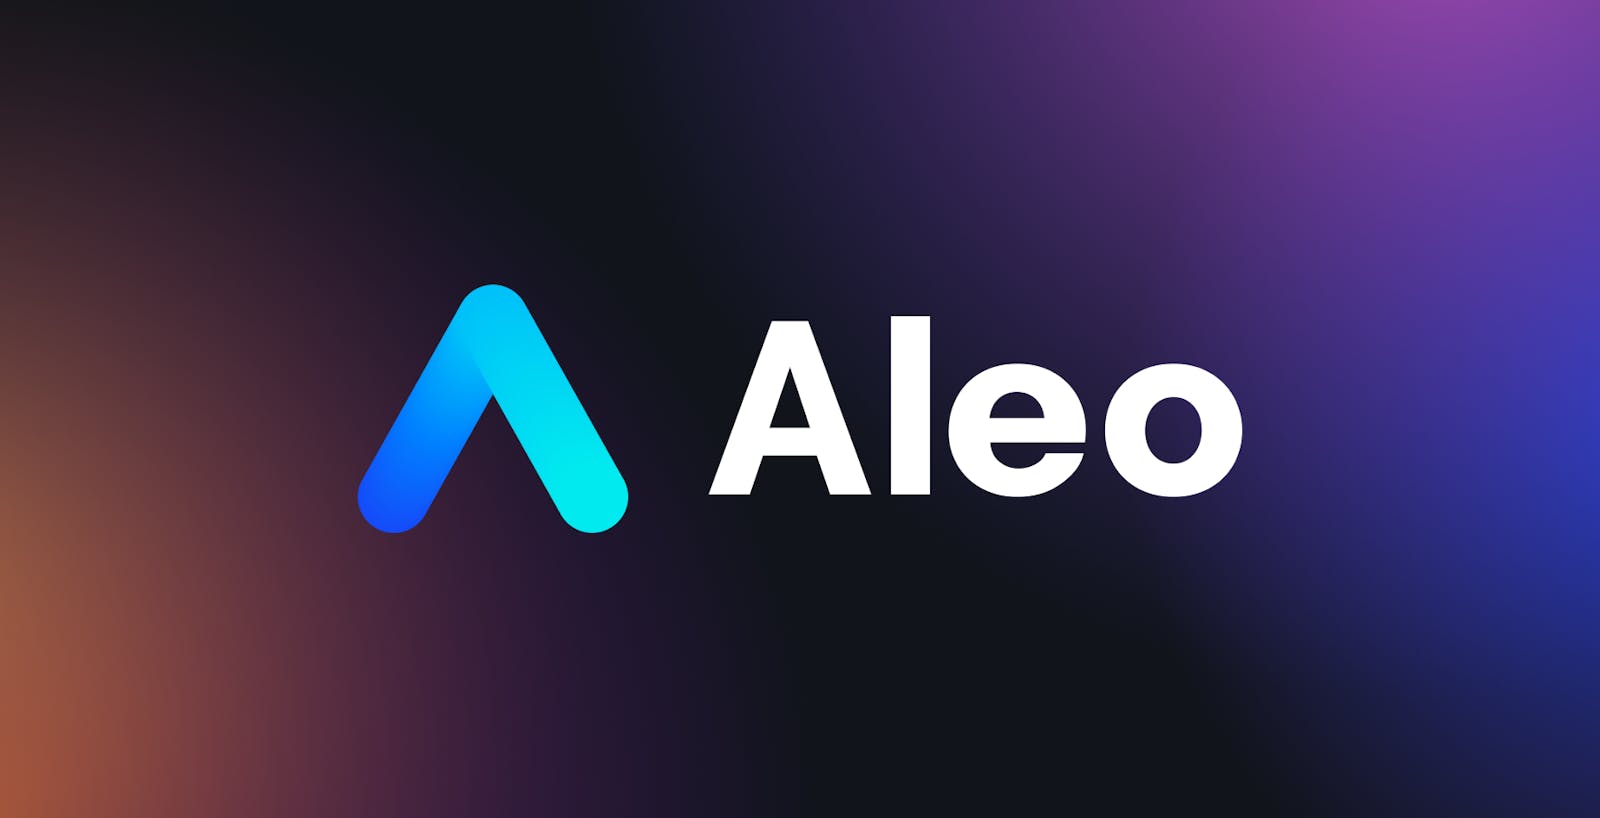 Aleo-Monopoly v2: The use of Leo Programming